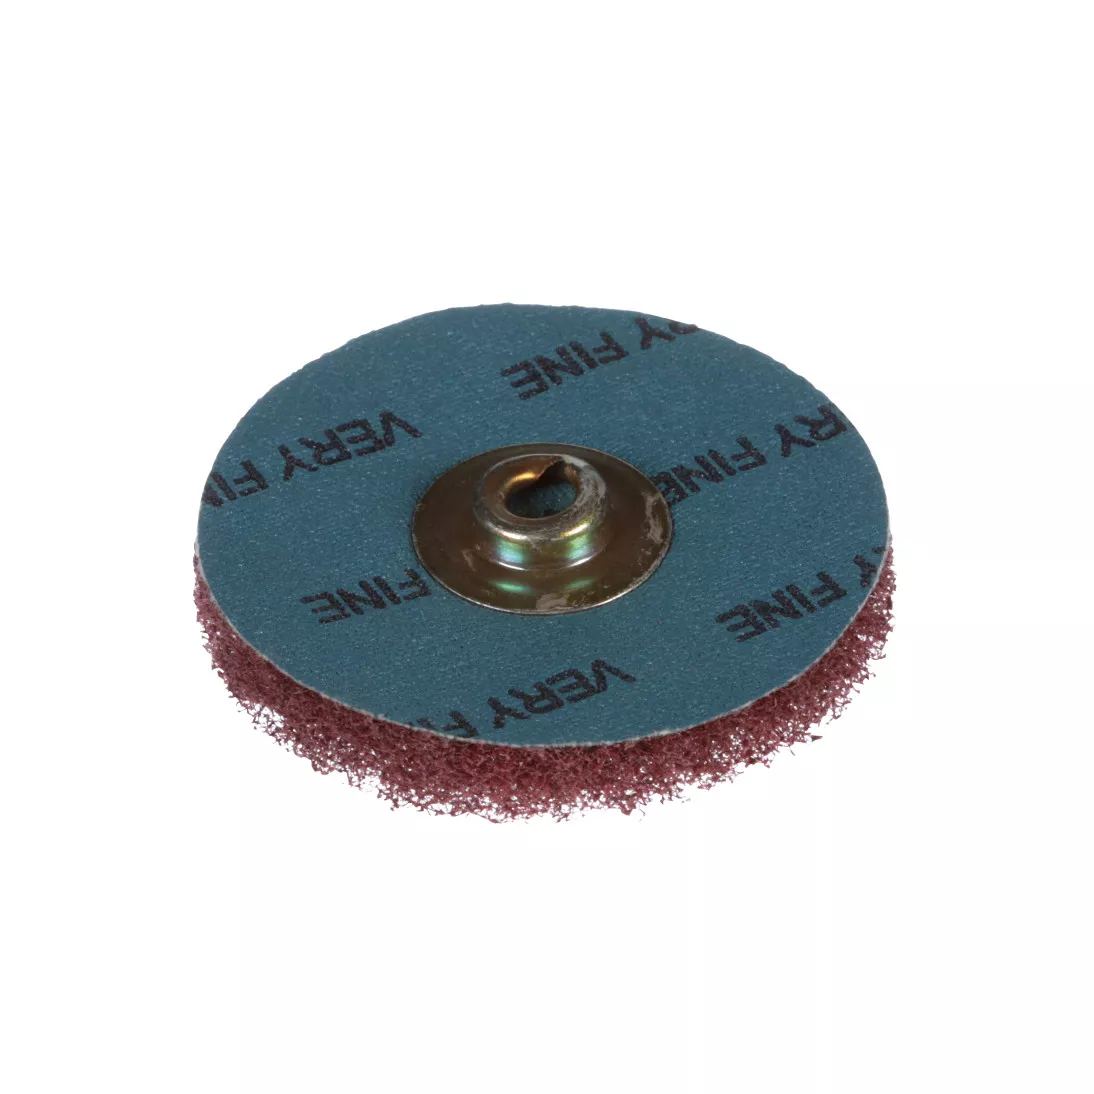 Standard Abrasives™ Quick Change Buff and Blend GP Disc, 840321, SiC
Very Fine, TSM, 2 in, 50 per inner, 500 per case